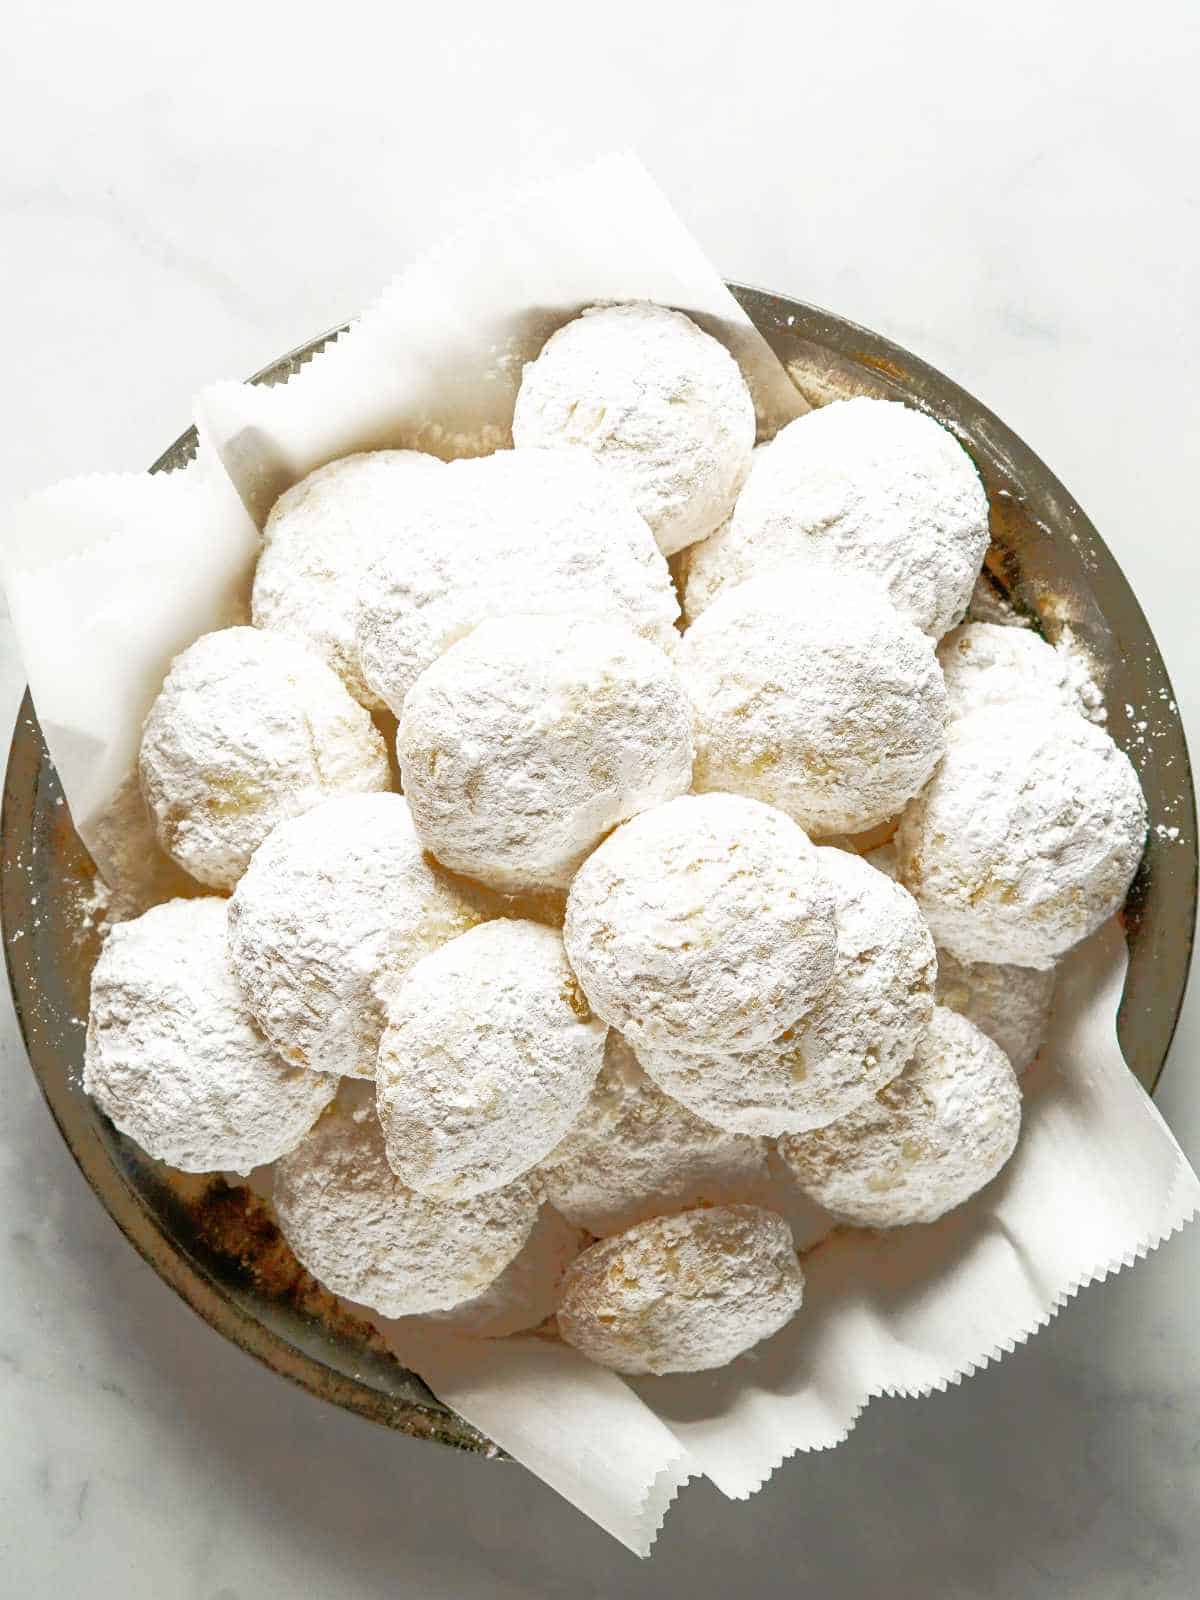 Danish wedding cookies rolled in powdered sugar.